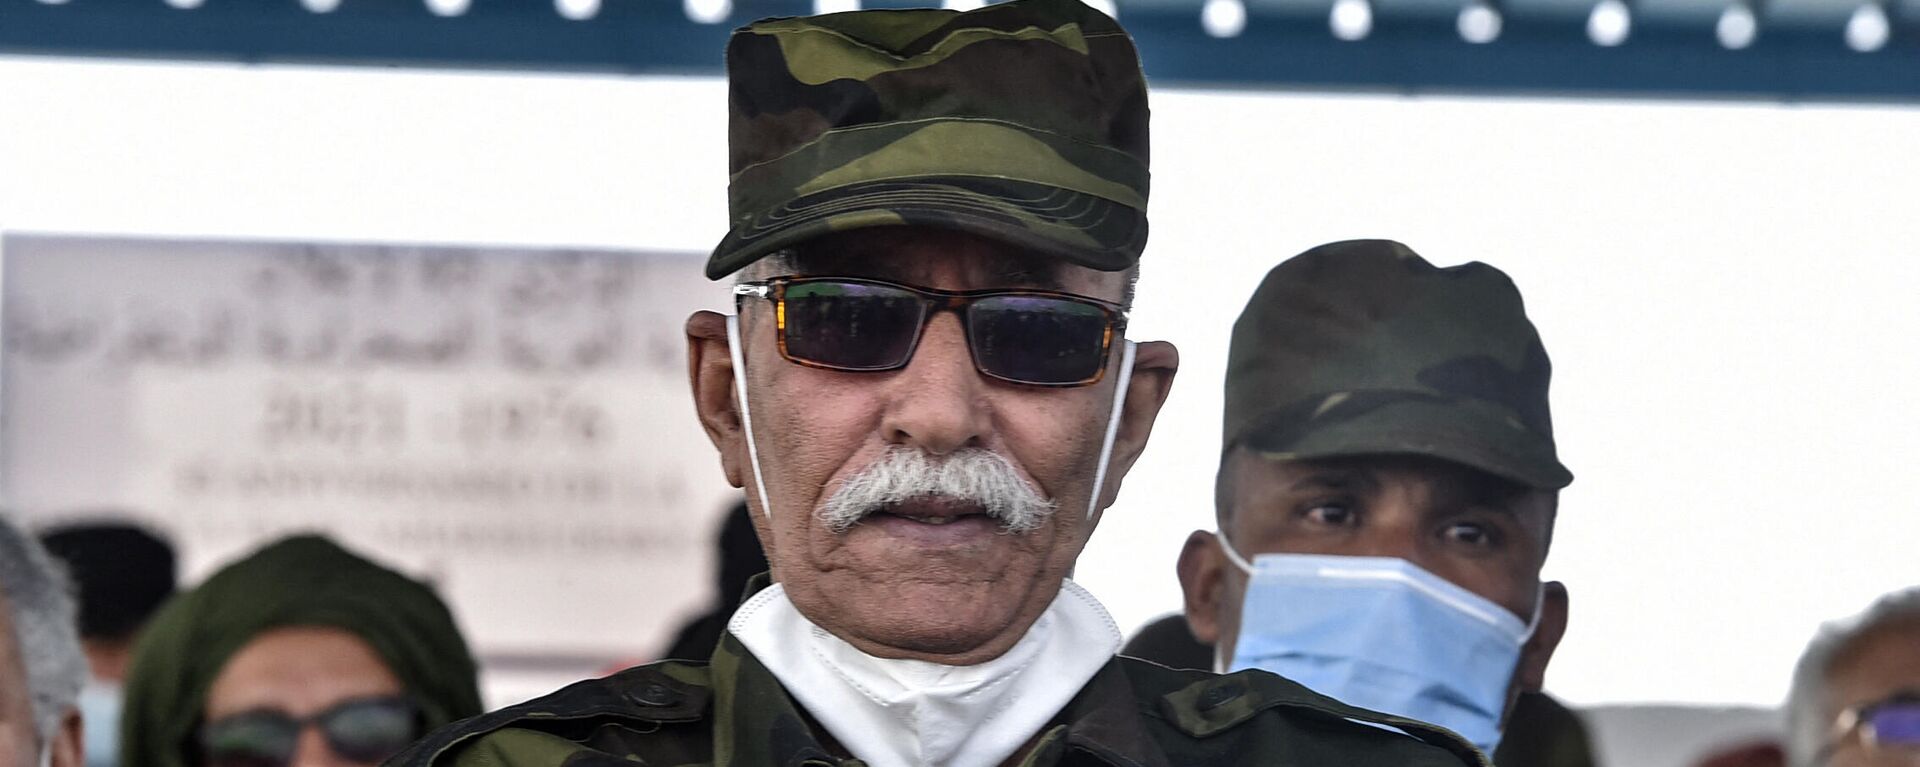 Brahim Ghali, el líder del Frente Polisario - Sputnik Mundo, 1920, 01.06.2021